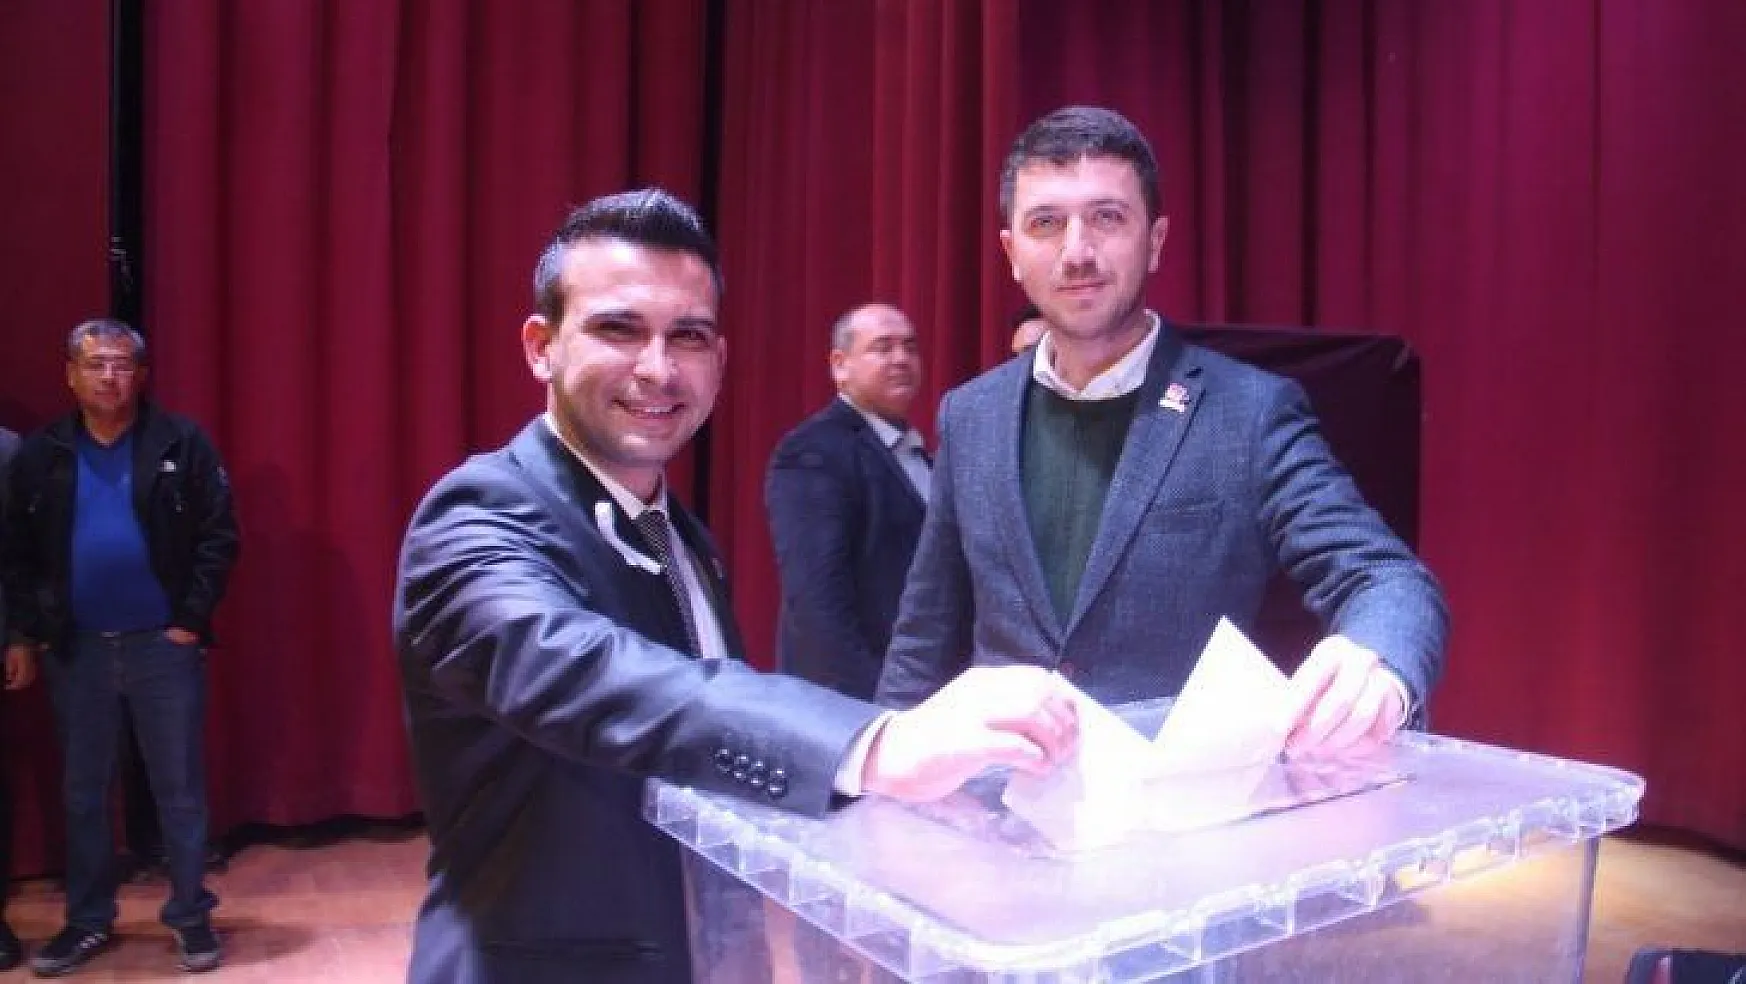 CHP Gençlik kolları başkanlığına Oğuzhan Çoban seçildi